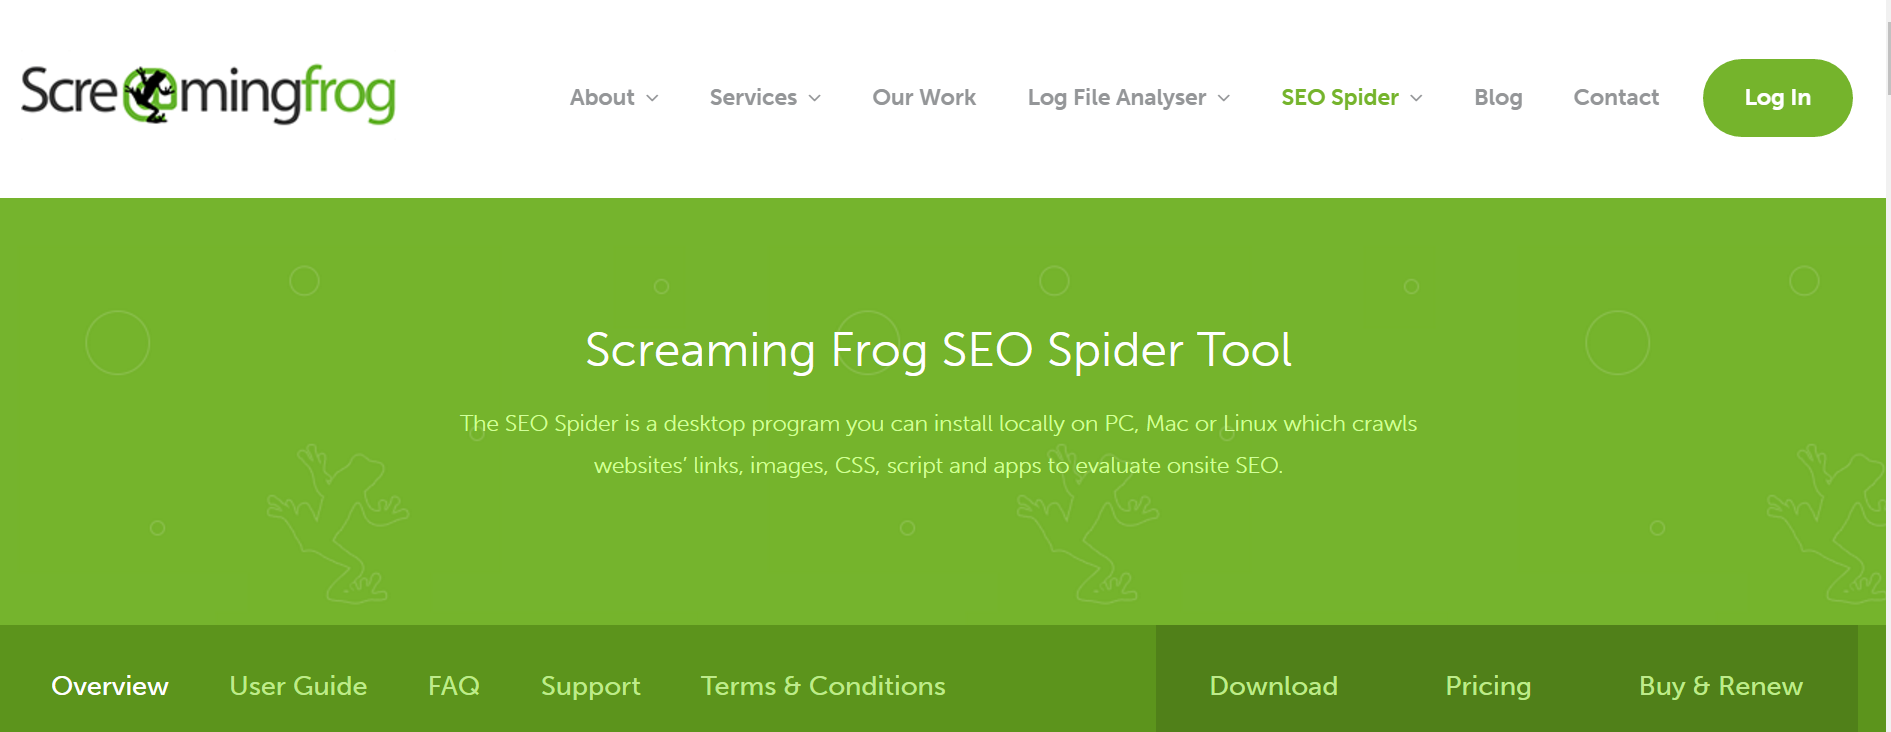 screamingfrog seo spider tool